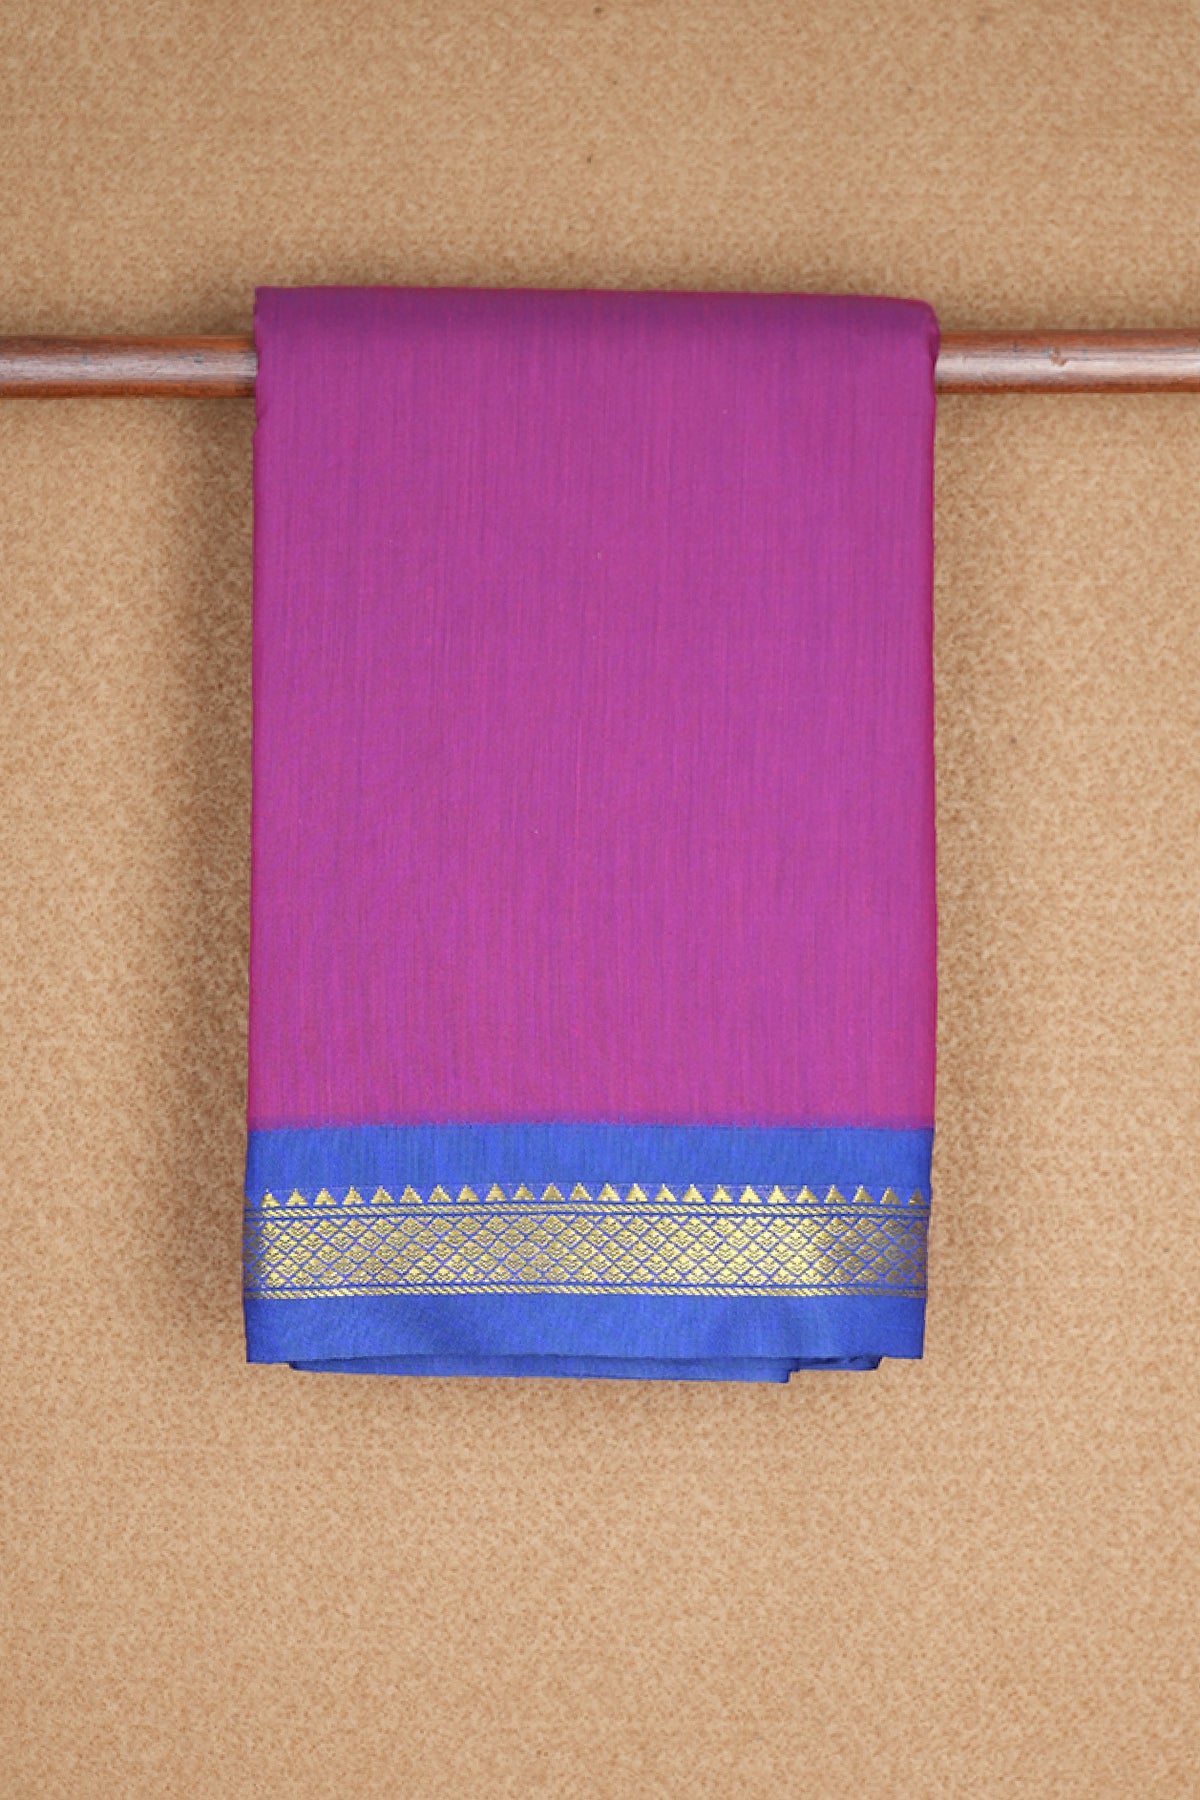 Contrast Zari Border Purple Pink Apoorva Semi Silk Saree